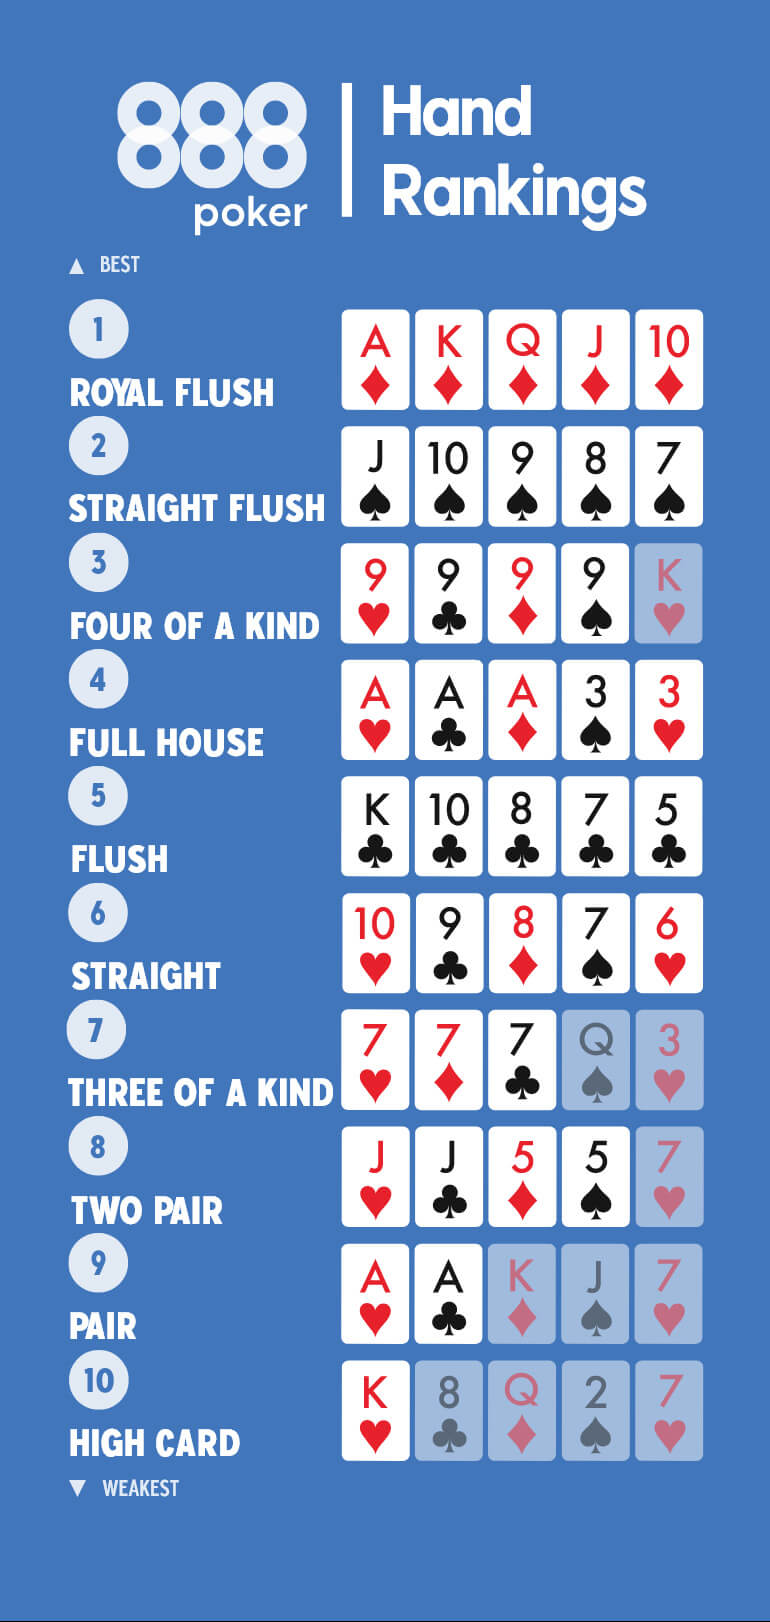 Poker Rules – Learn the Basic Rules of Poker